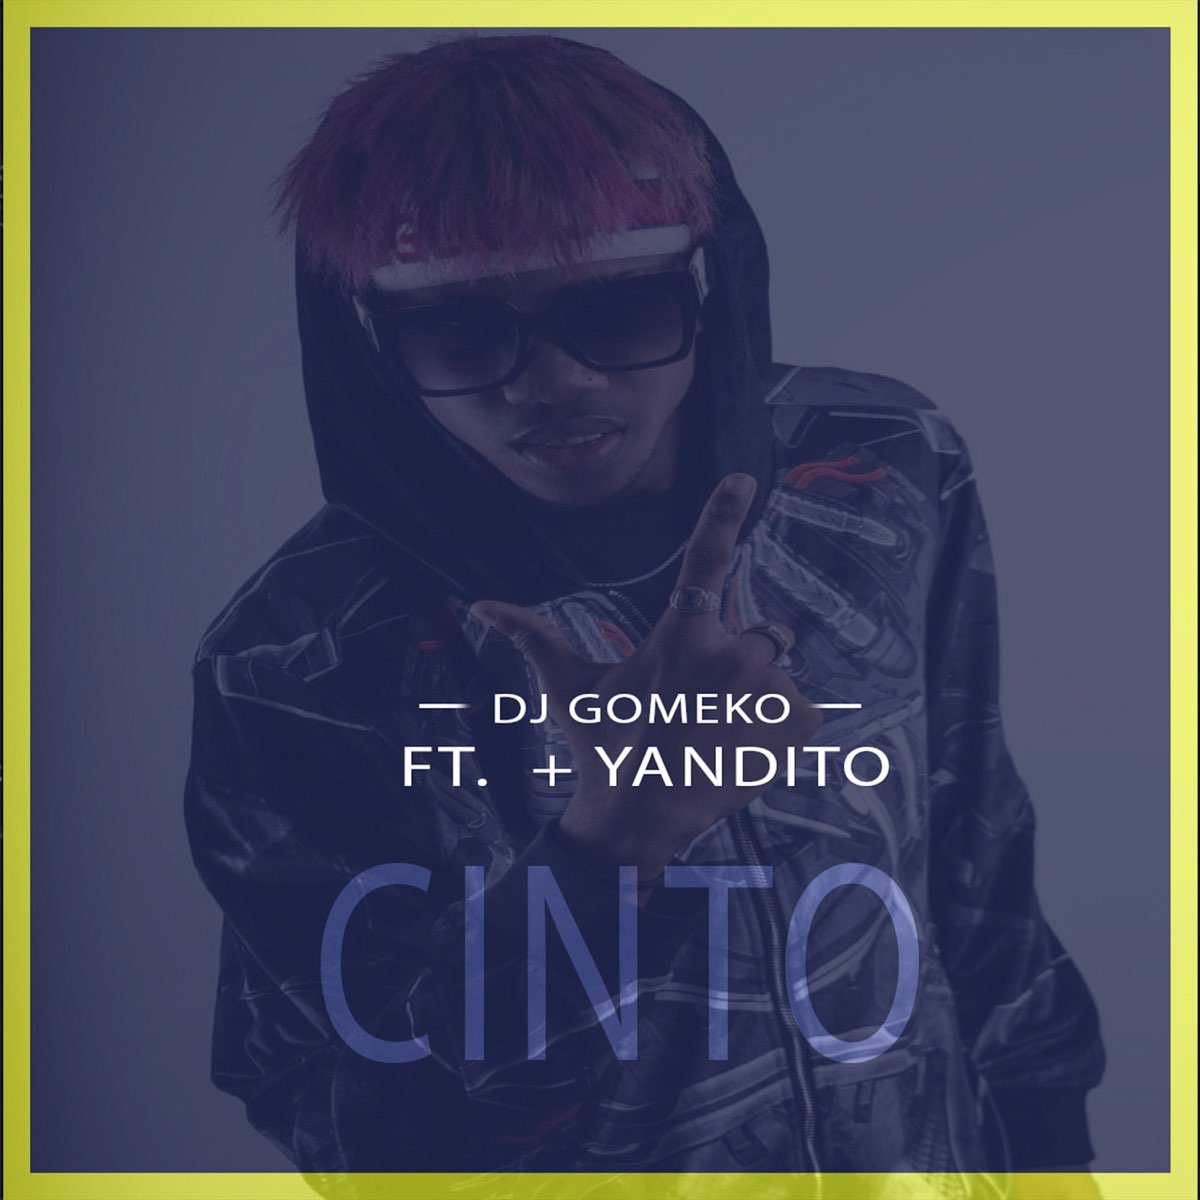 Cinto (feat. + YANDITO) - Single by Dj GoMeko on Apple Music